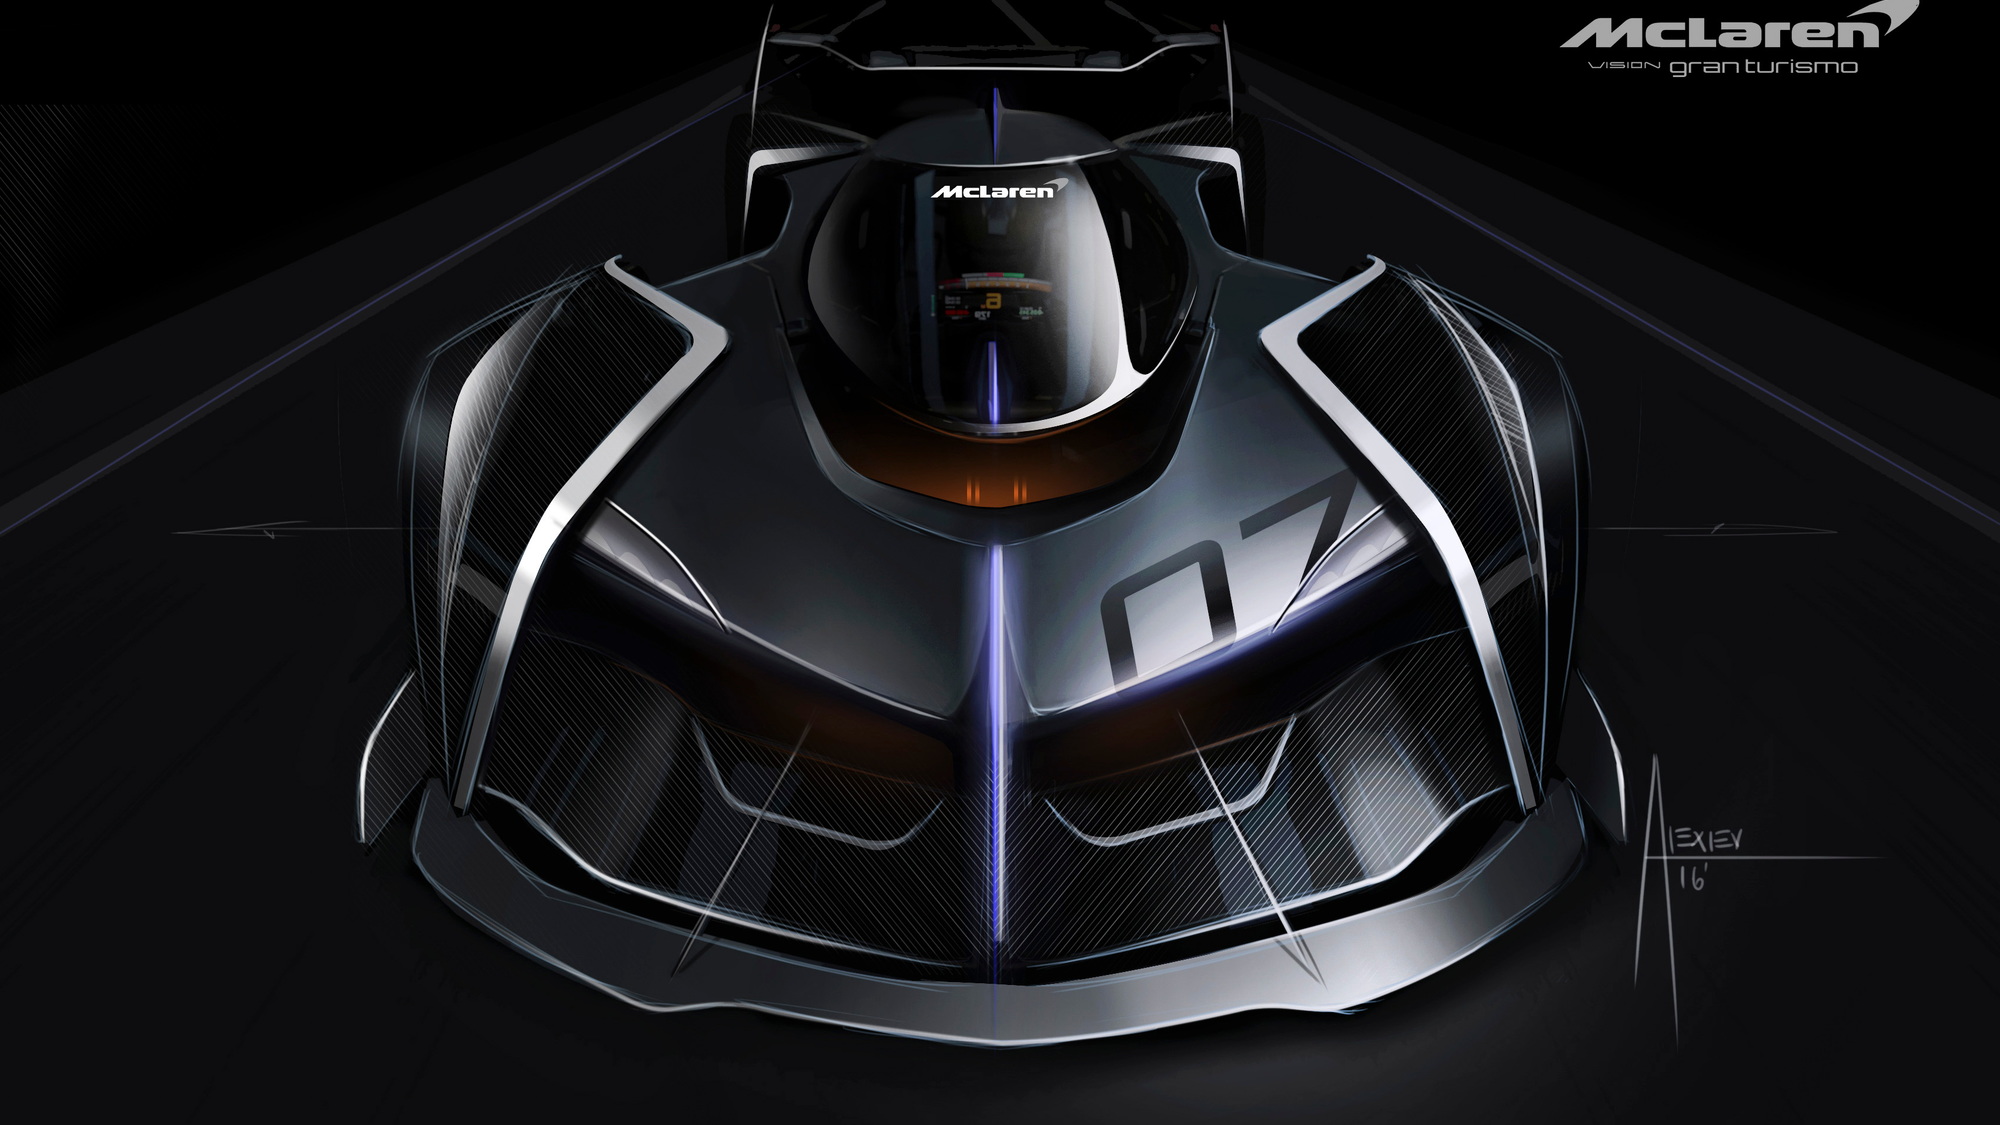 McLaren Ultimate Vision GT virtual concept car